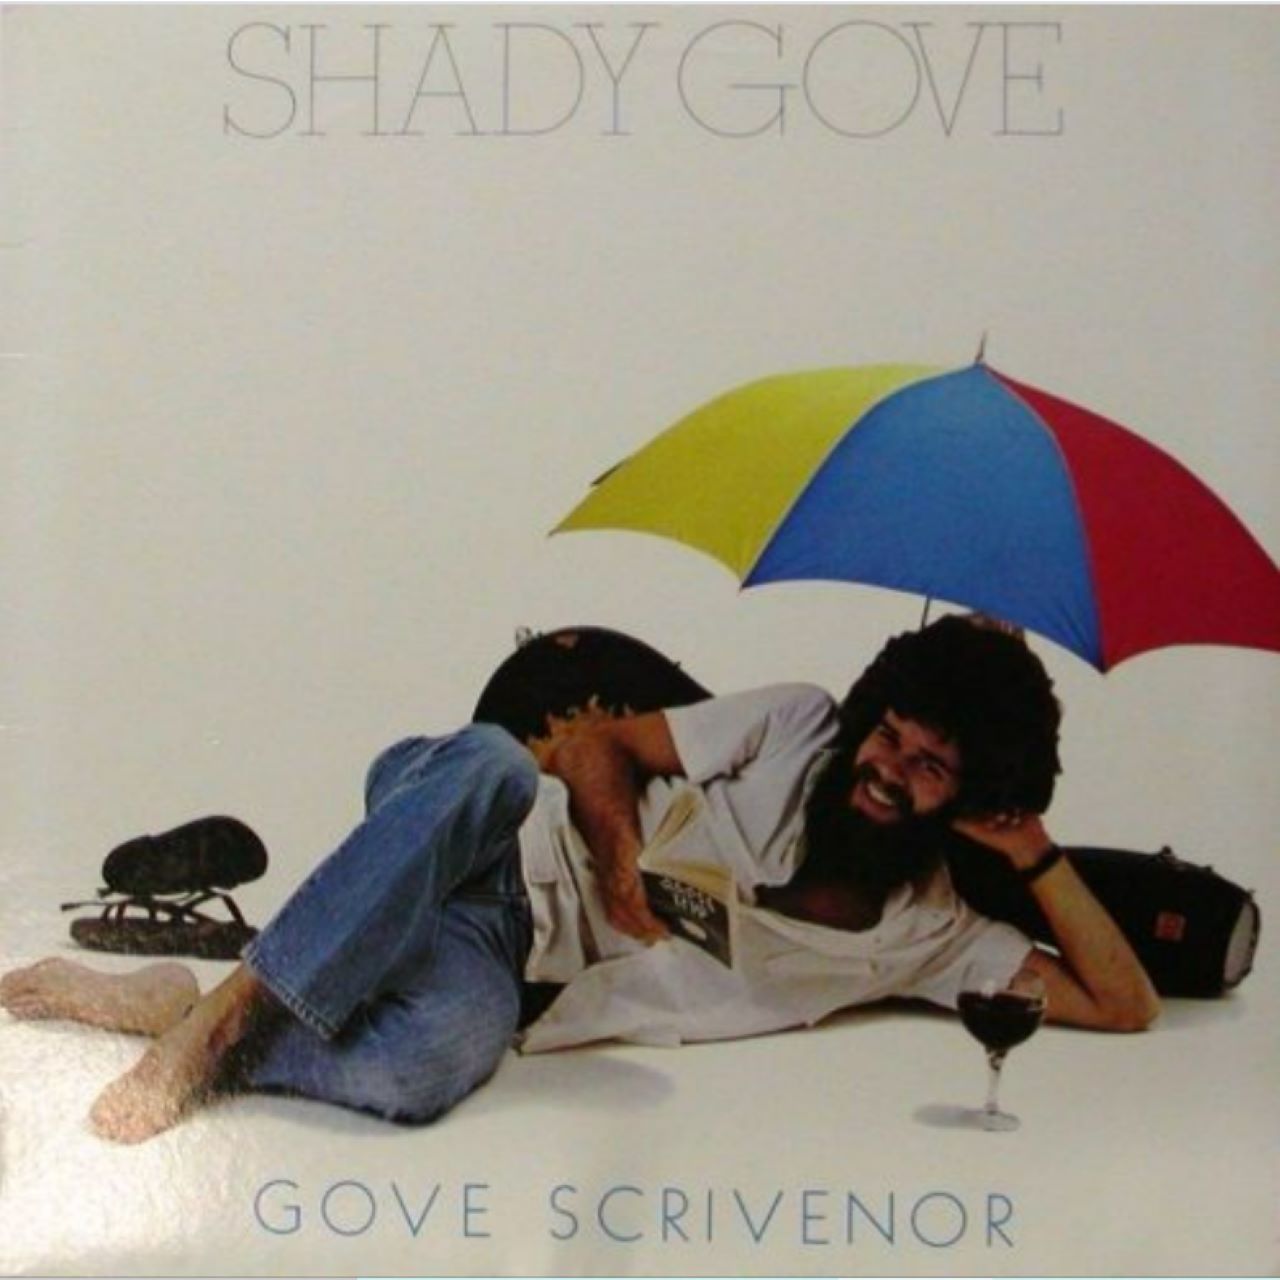 Gove Scrivenor – Shady Grove cover album